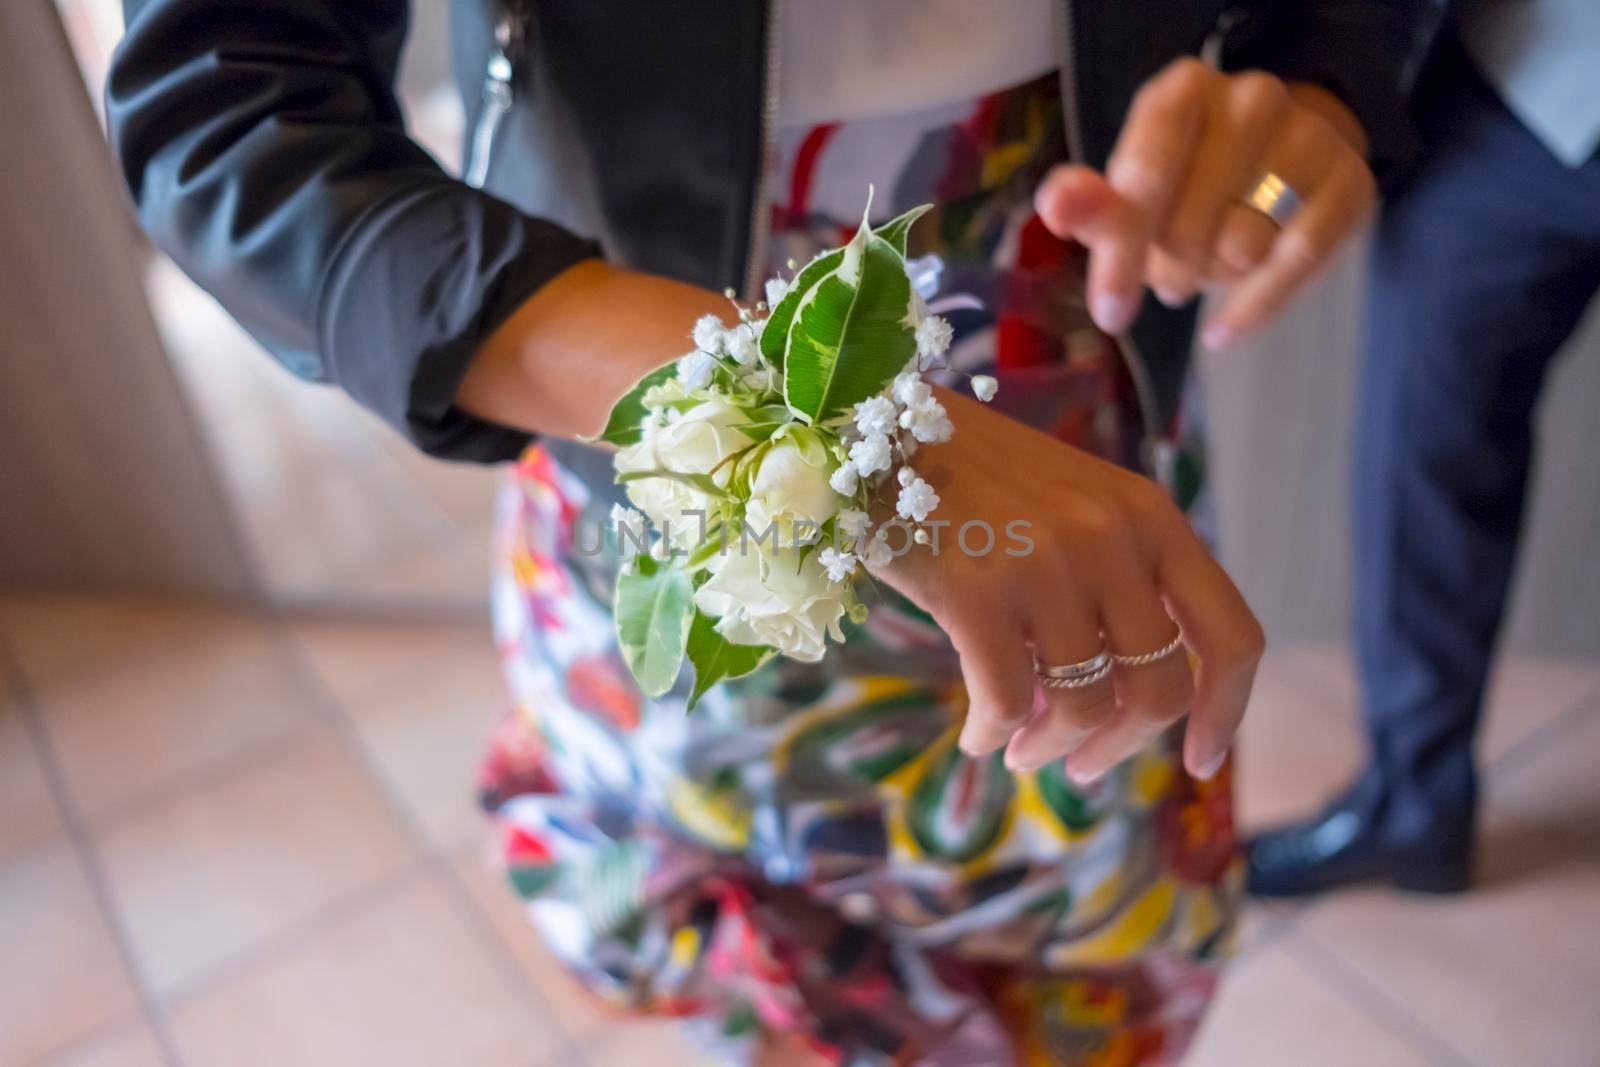 wedding witness bouquet for catholic wedding. High quality photo